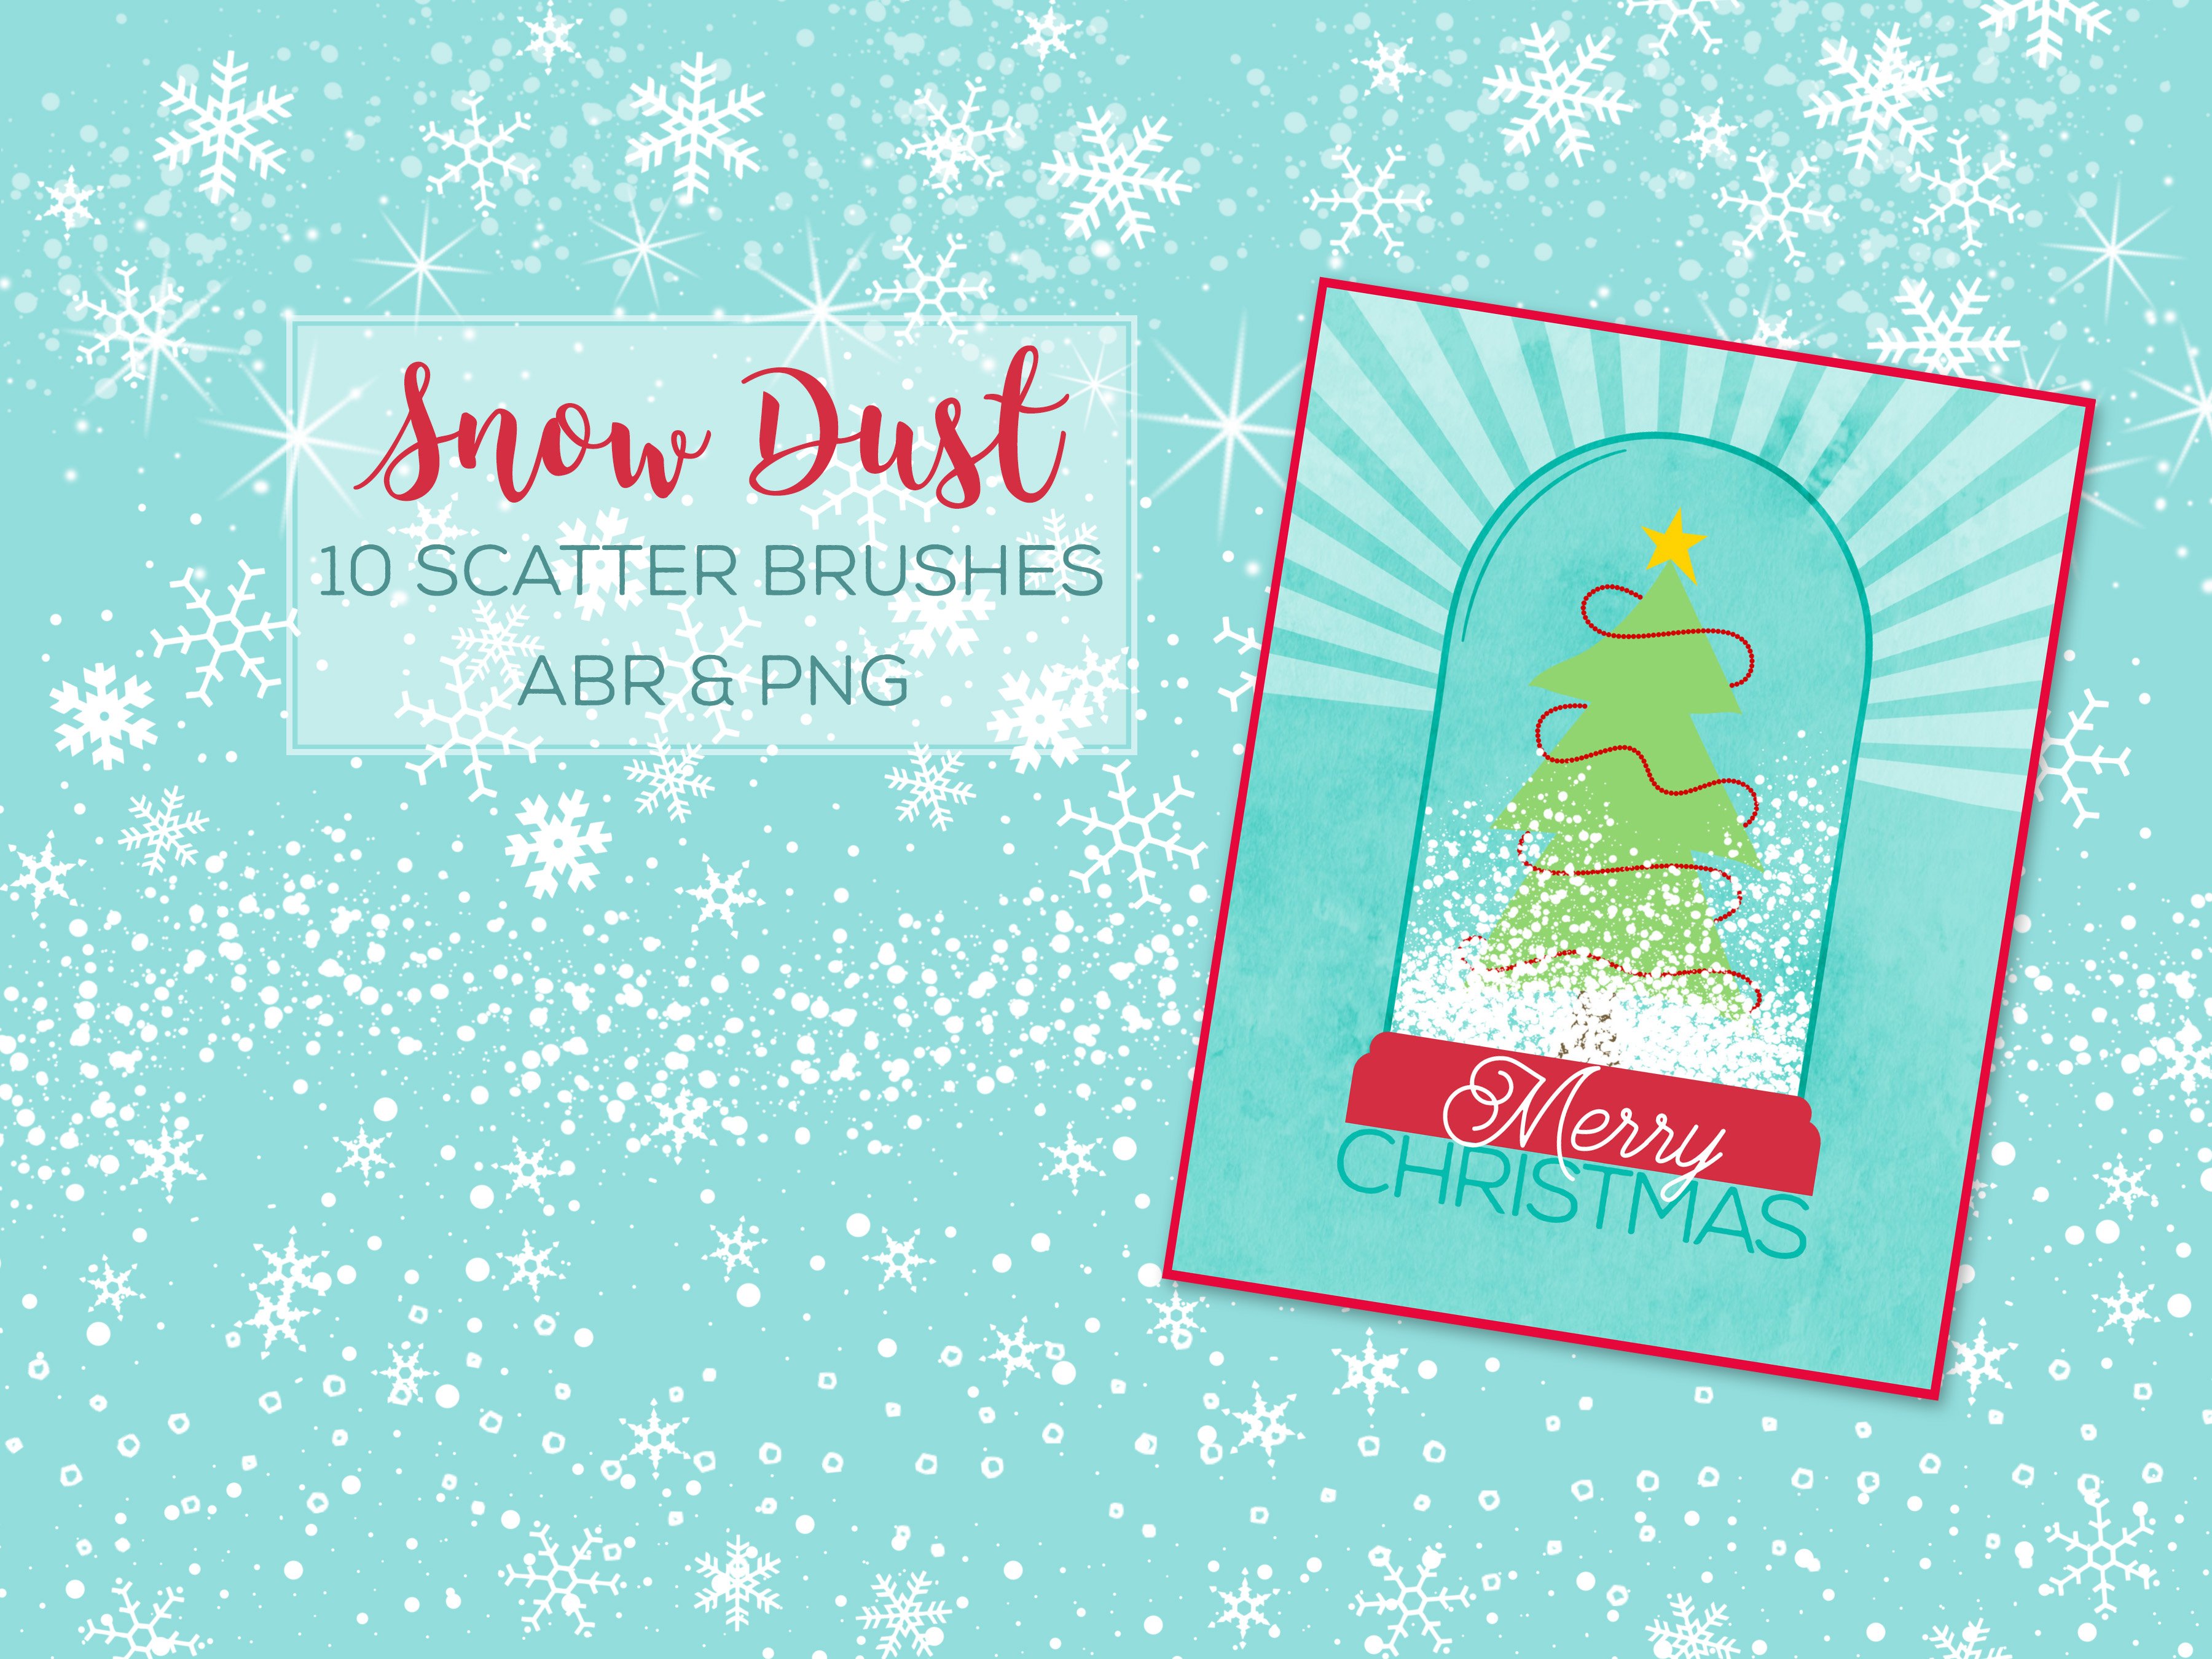 Snow Dust Scatter Brushescover image.